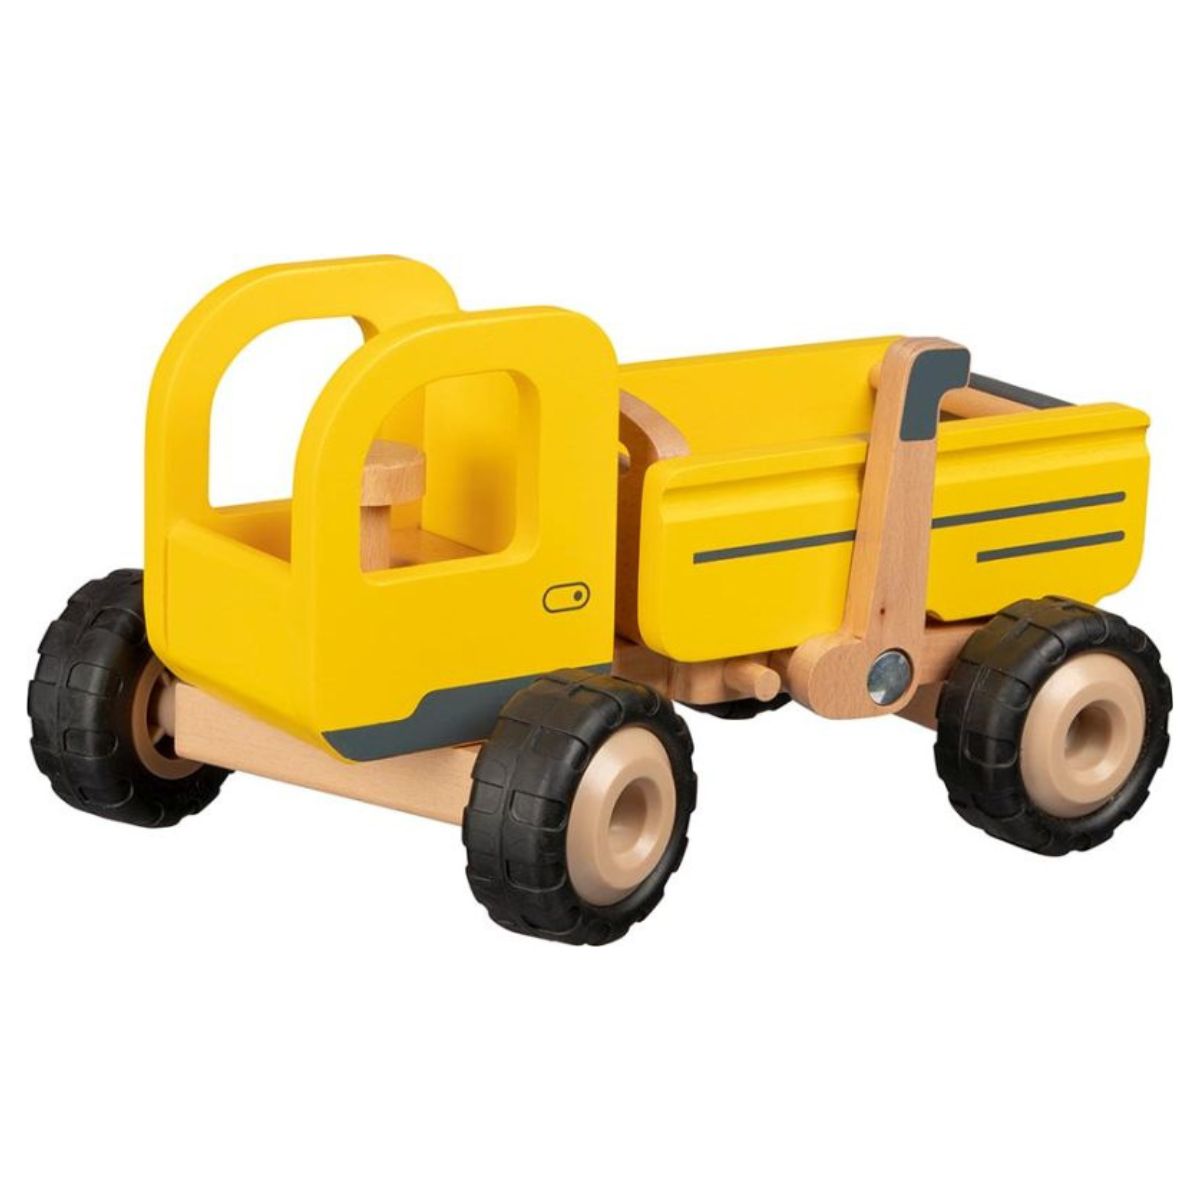 GOKI: Wooden truck with dump truck